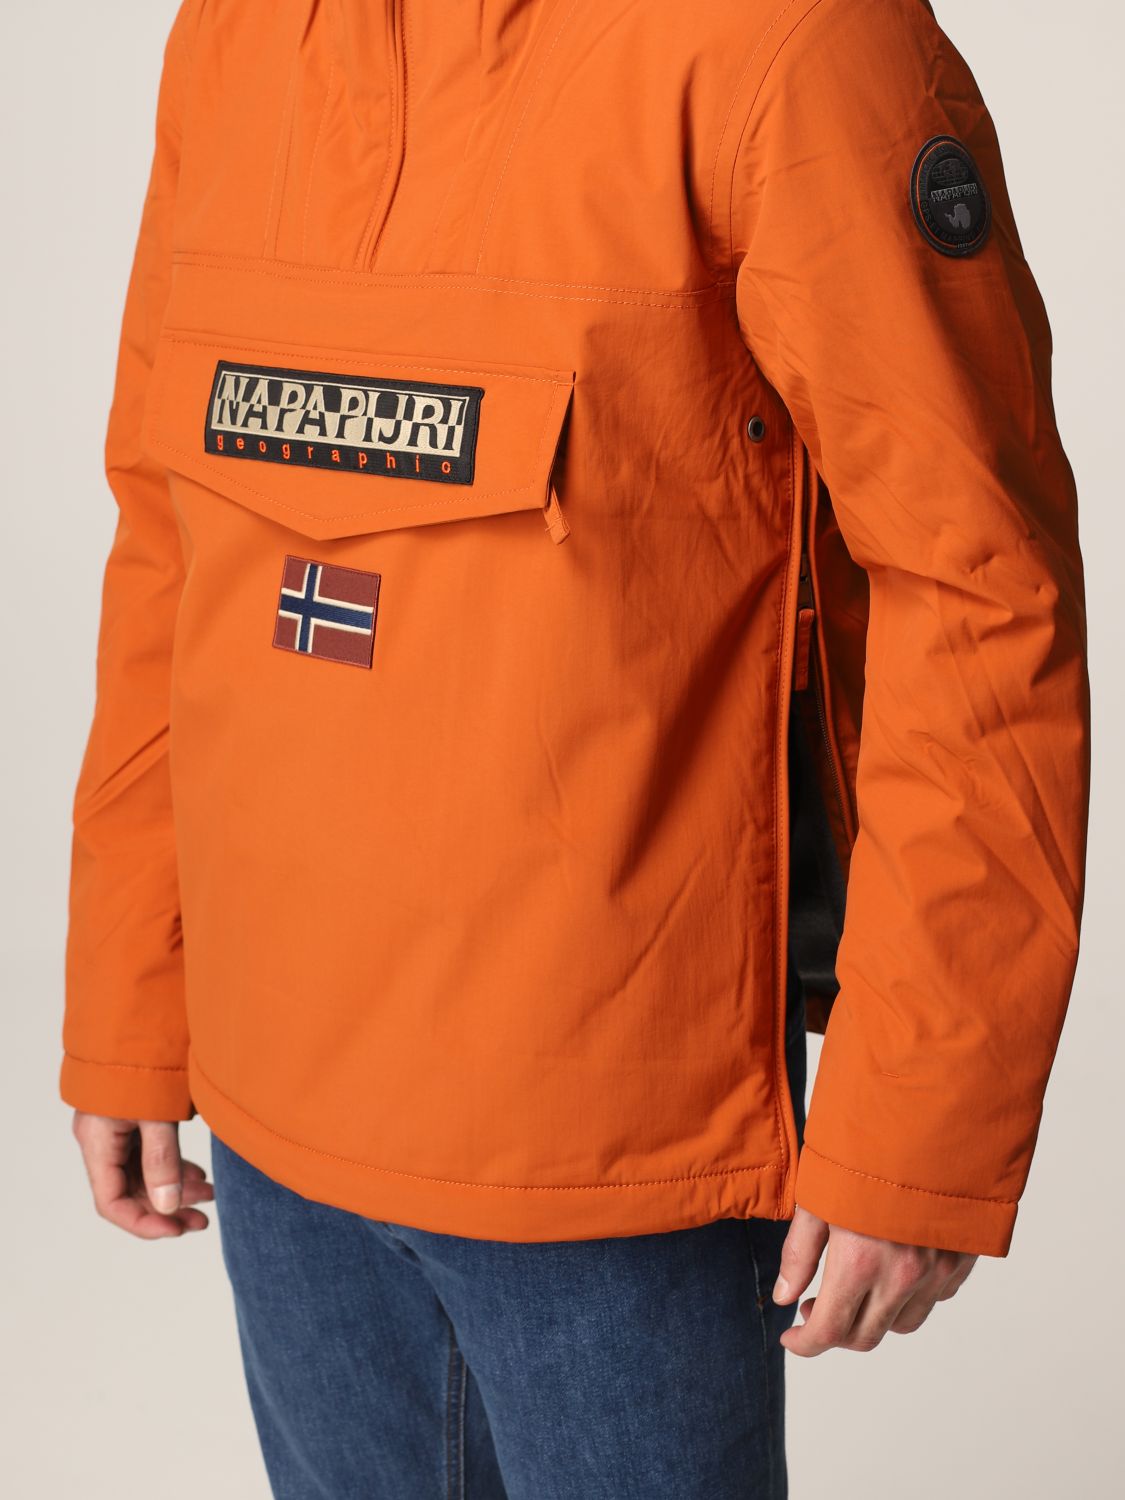 discretie Verstenen fossiel NAPAPIJRI: jacket for man - Orange | Napapijri jacket NA4EGZ online on  GIGLIO.COM